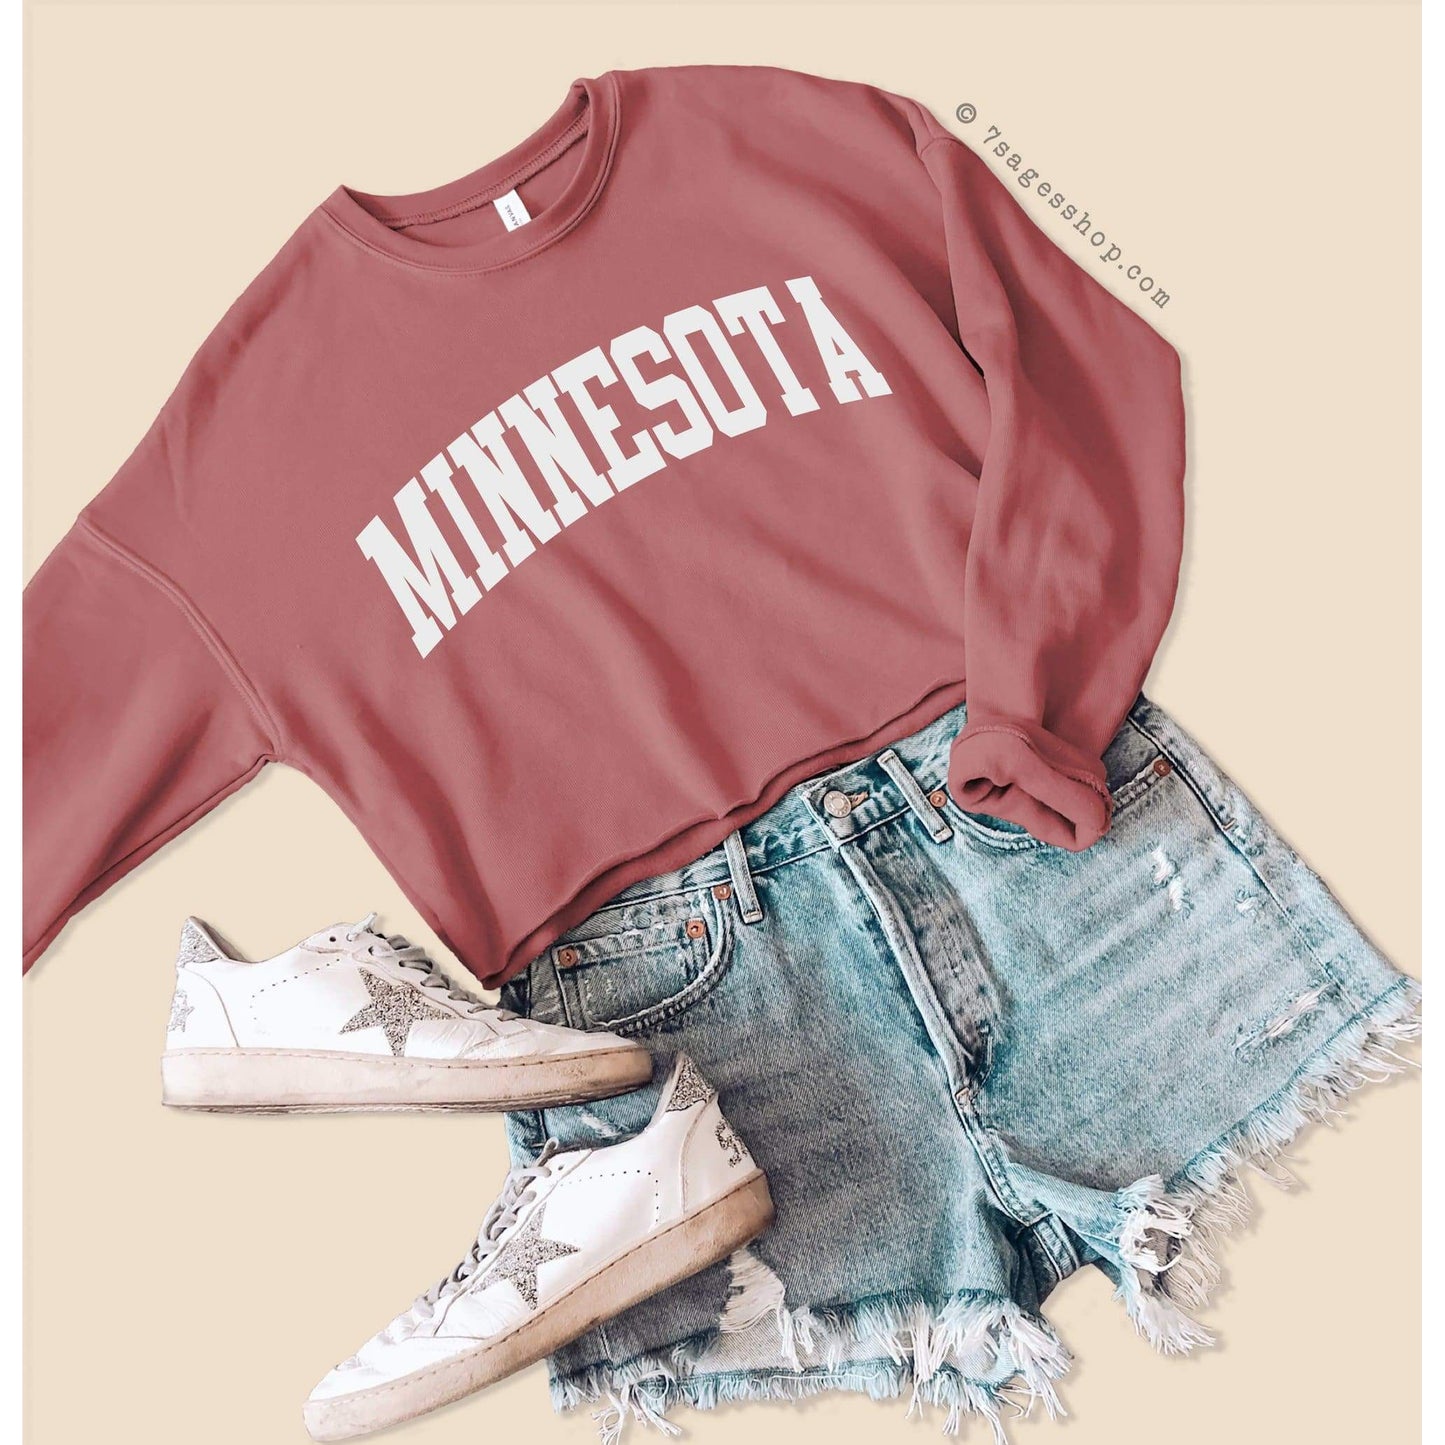 Minnesota Sweatshirt - Minnesota Cropped Sweatshirt - Minnesota Shirts - University of Minnesota Crop Top - Minnesota State Sweatshirt